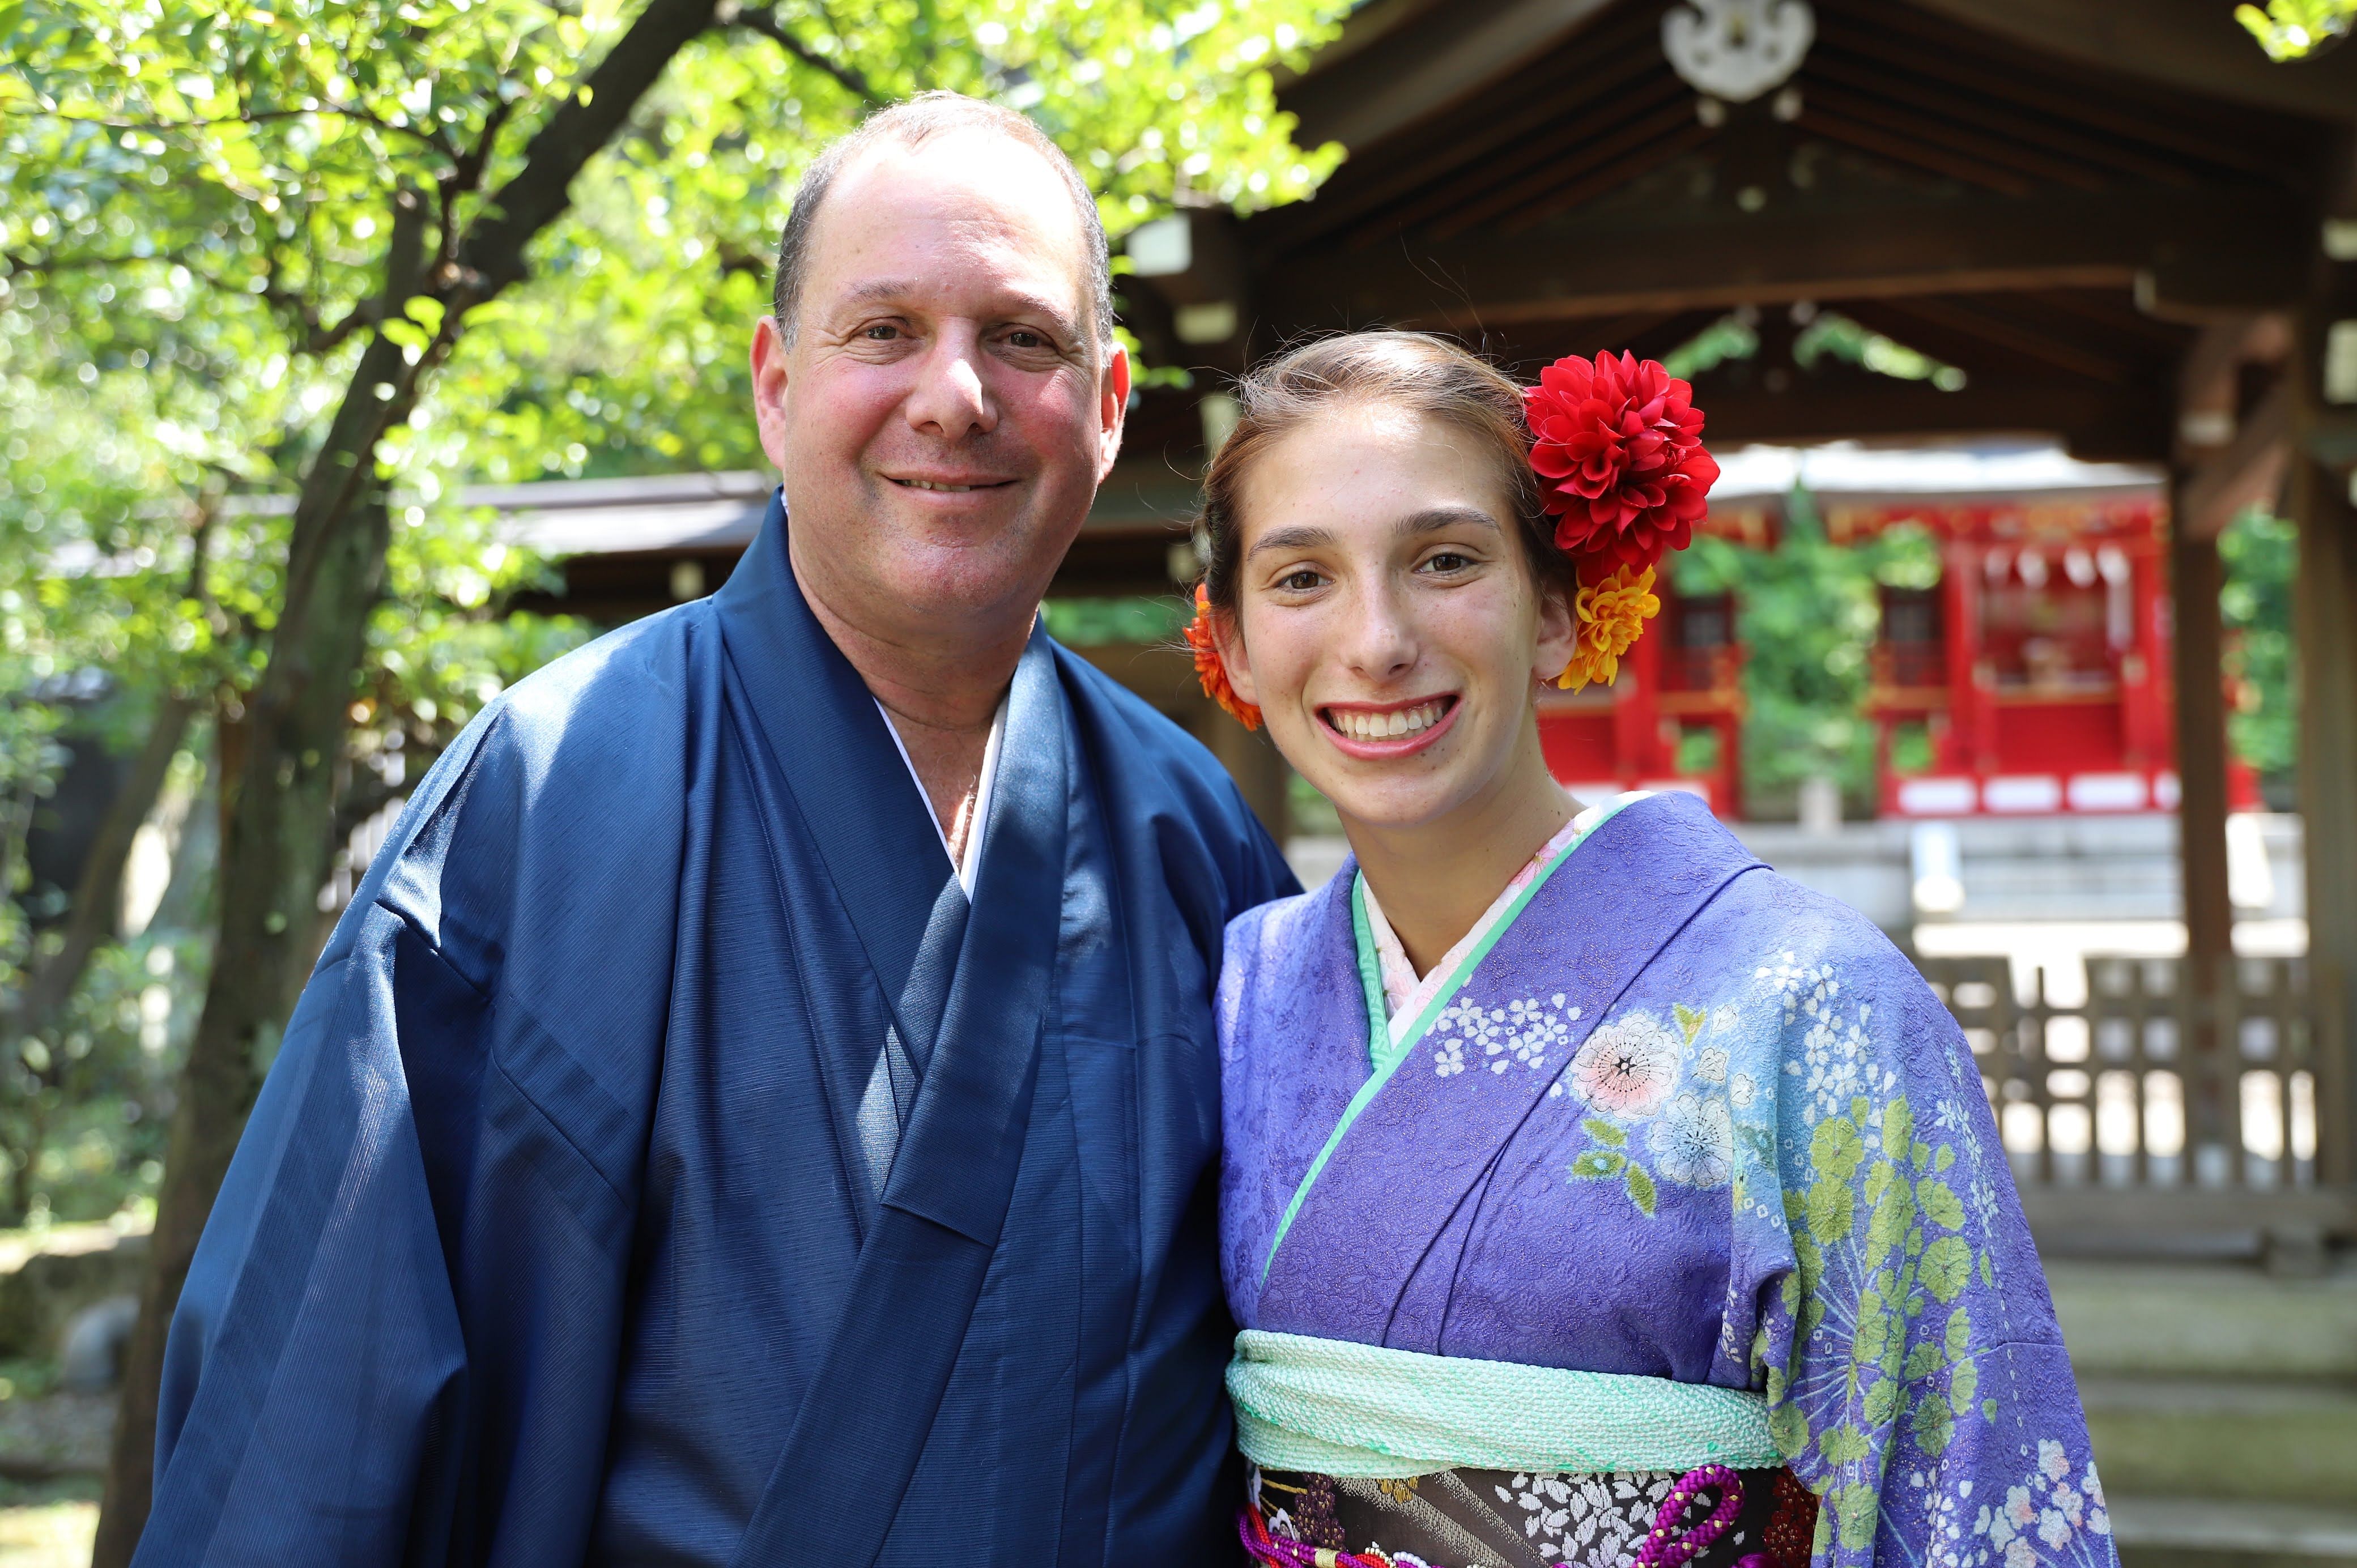 Classic Kimono Experience